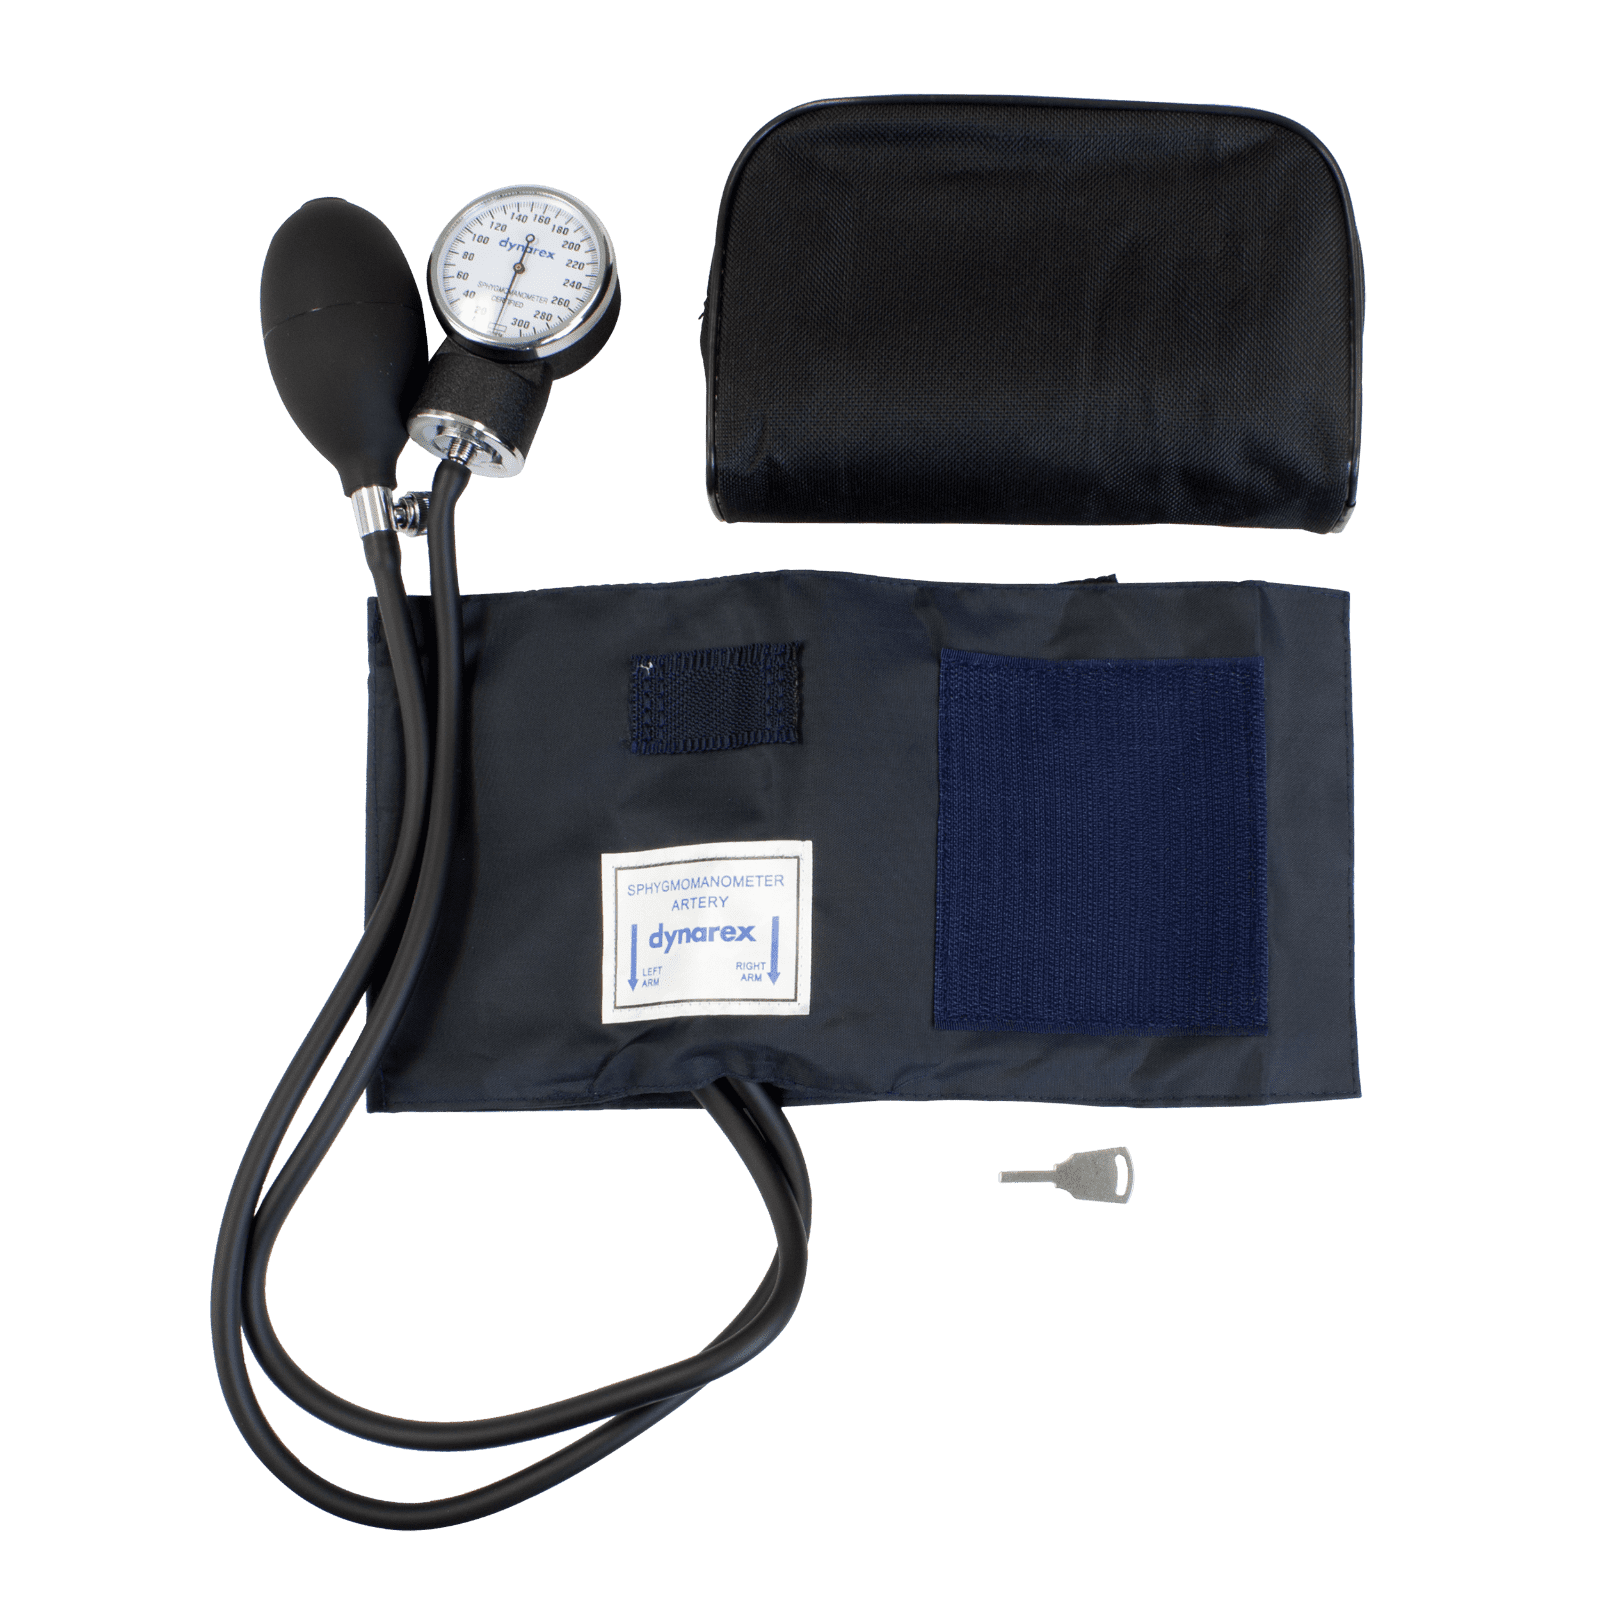 Dynarex 7107 Blood Pressure Cuff Sphygmomanometer Kit With Zippered